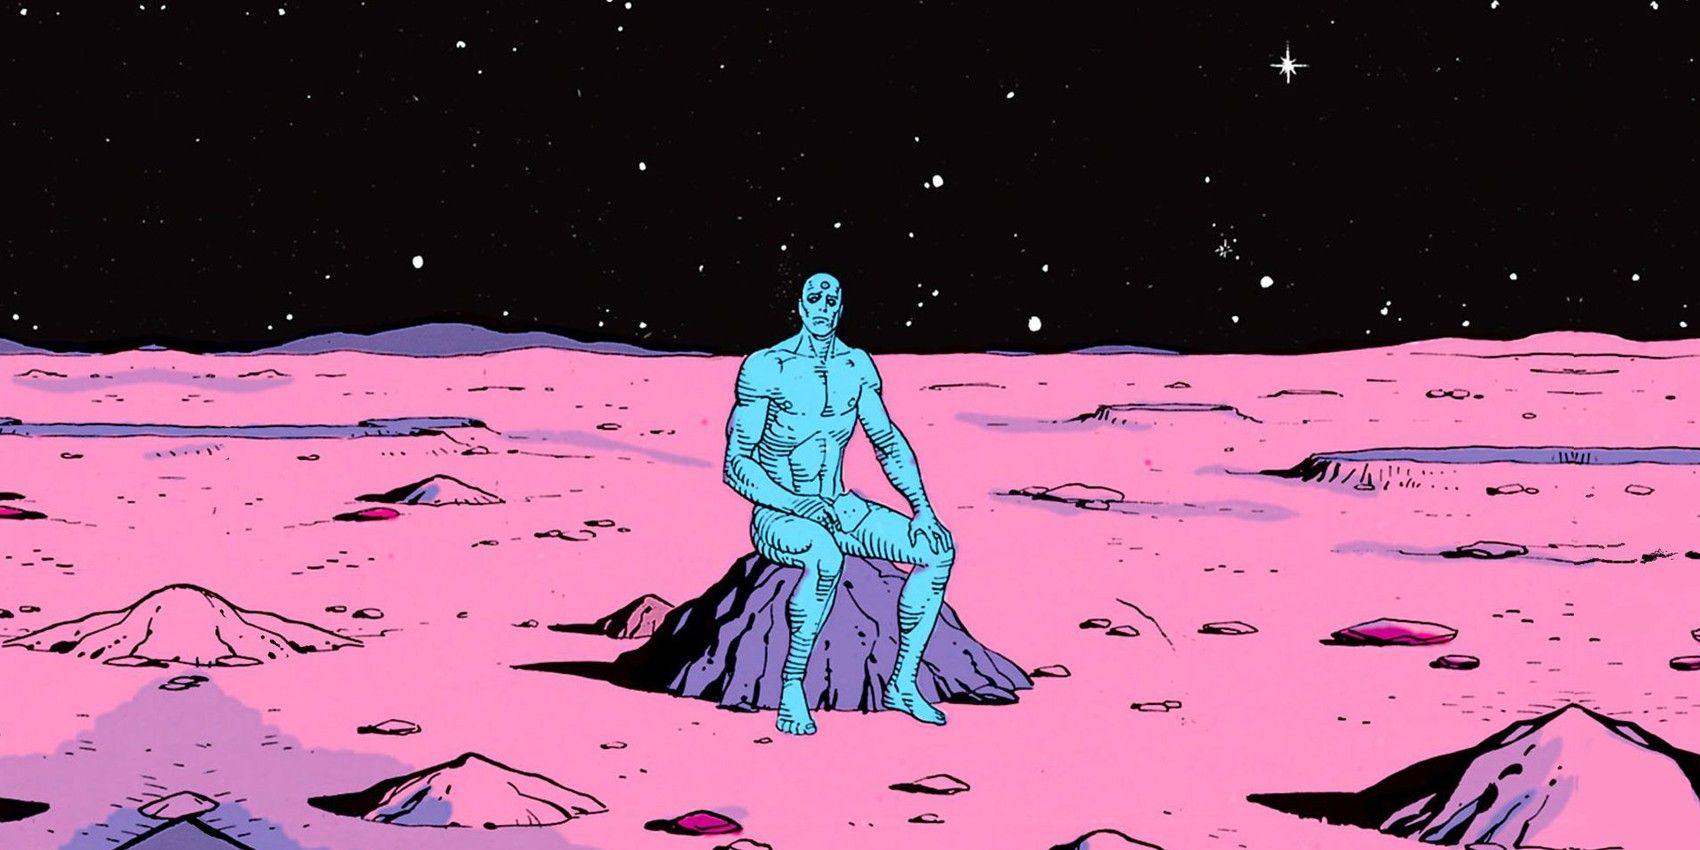 Doctor Manhattan sitting on a rock in Mars in Watchmen